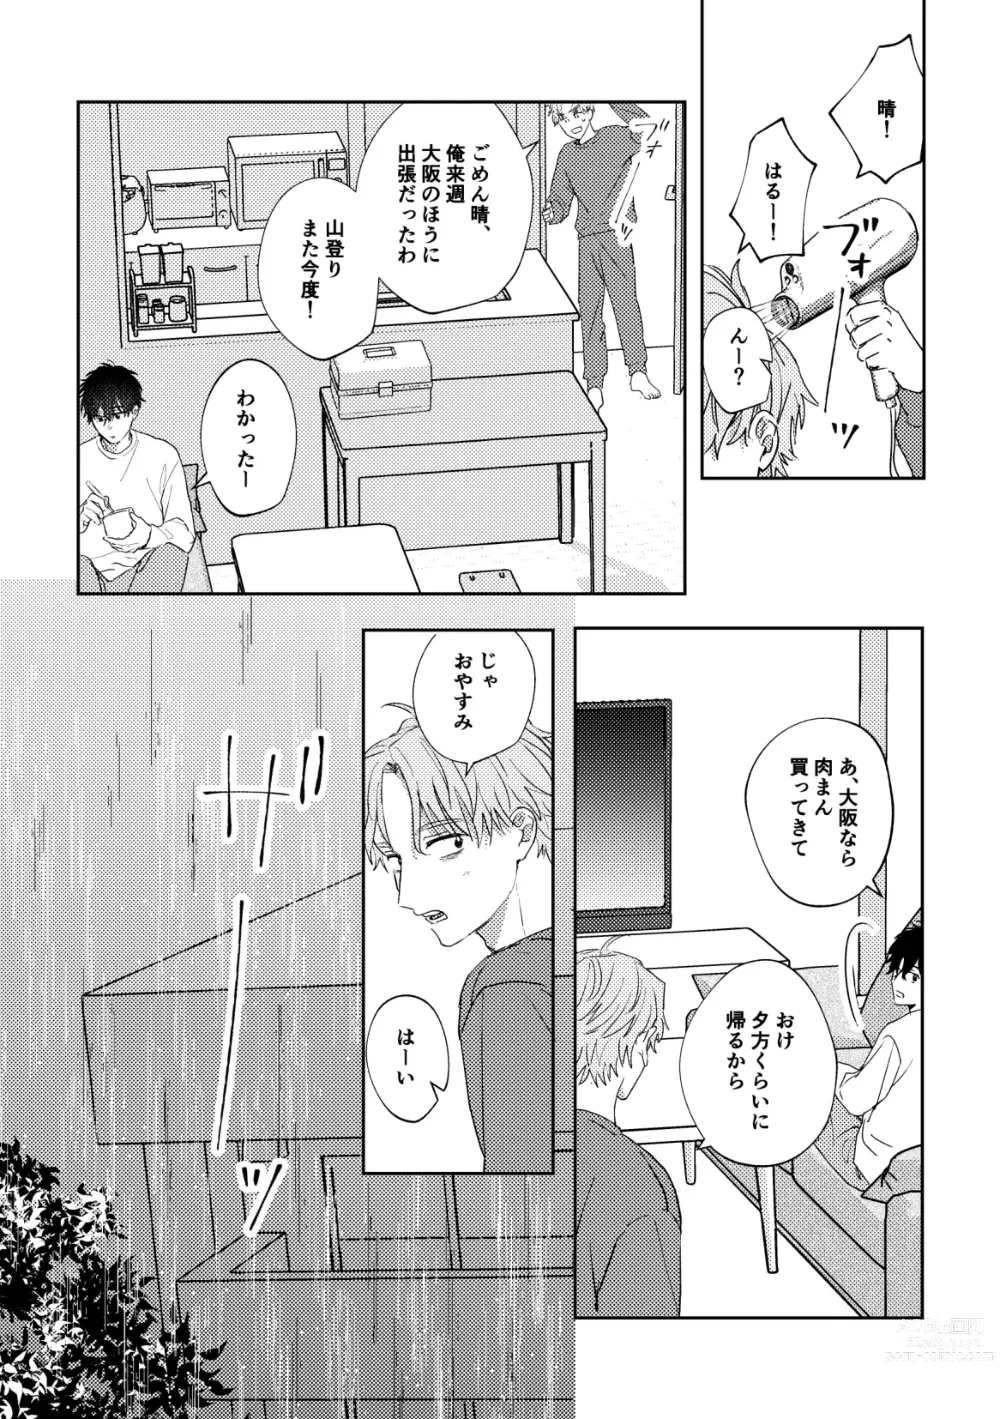 Page 17 of doujinshi Ame ni Hare wo Kau